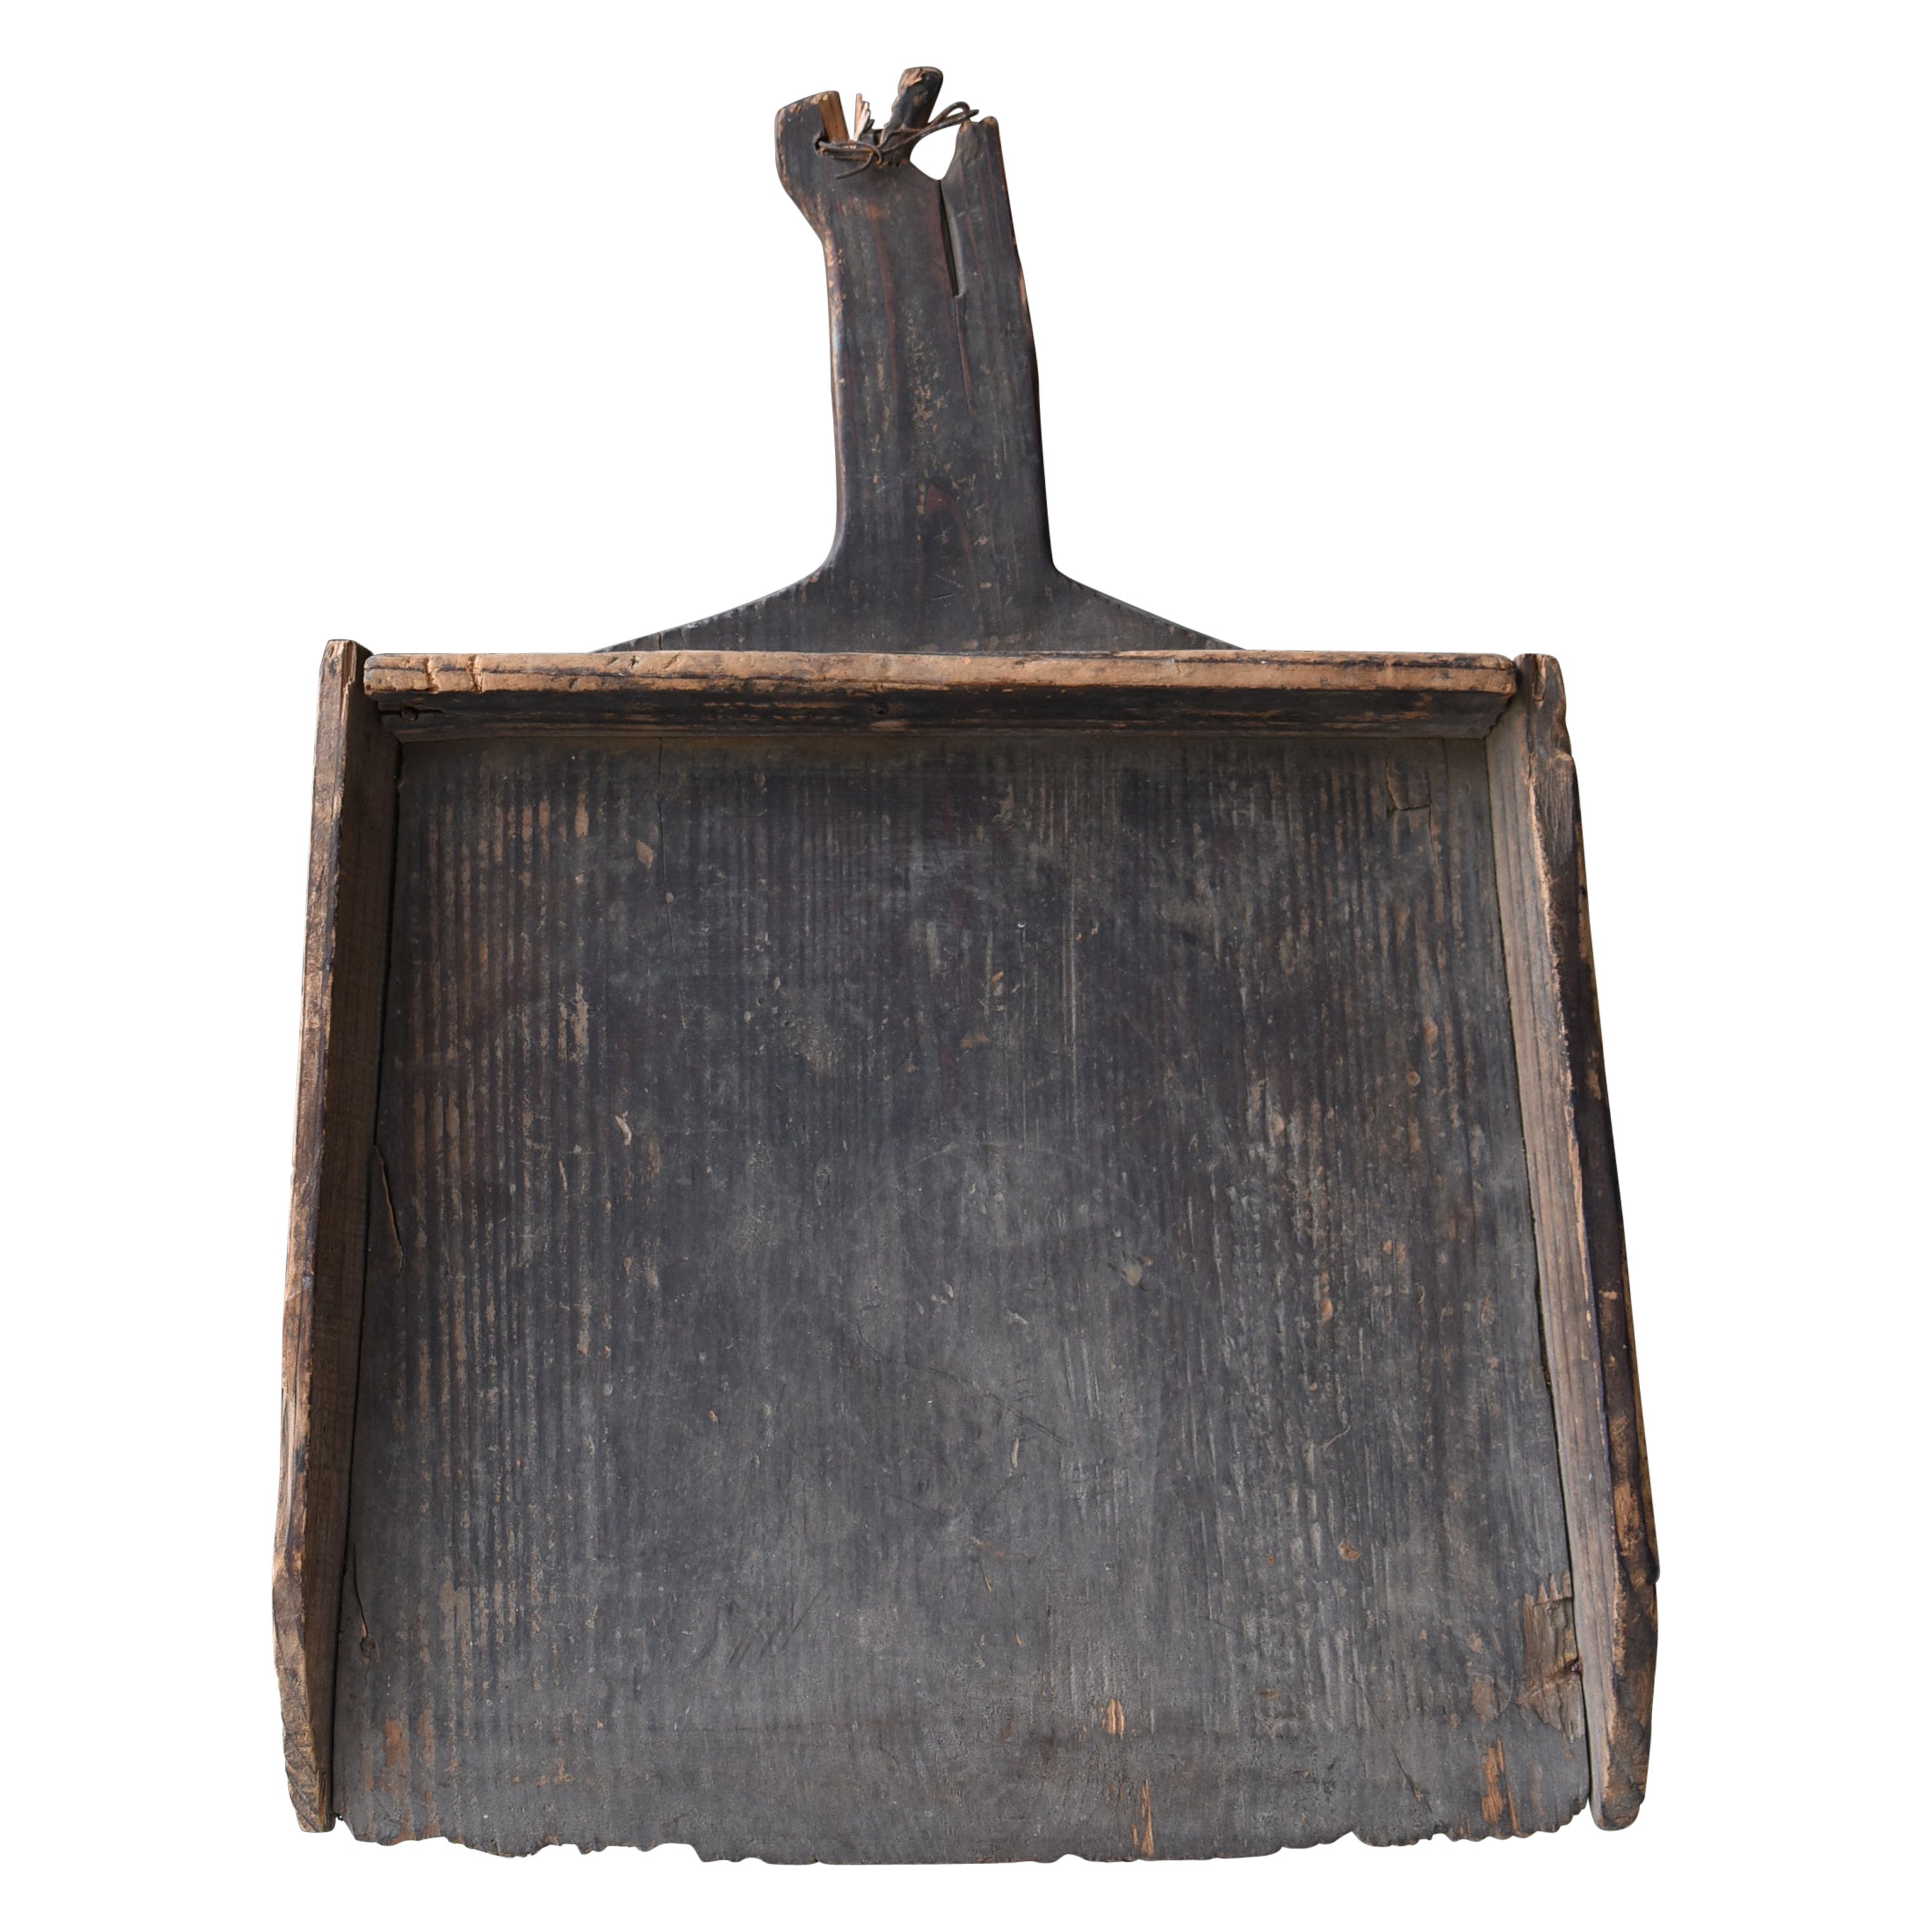 Japanese Antique Wabi Sabi Art Dustpan 1910s-1920s / Object Contemporary Art